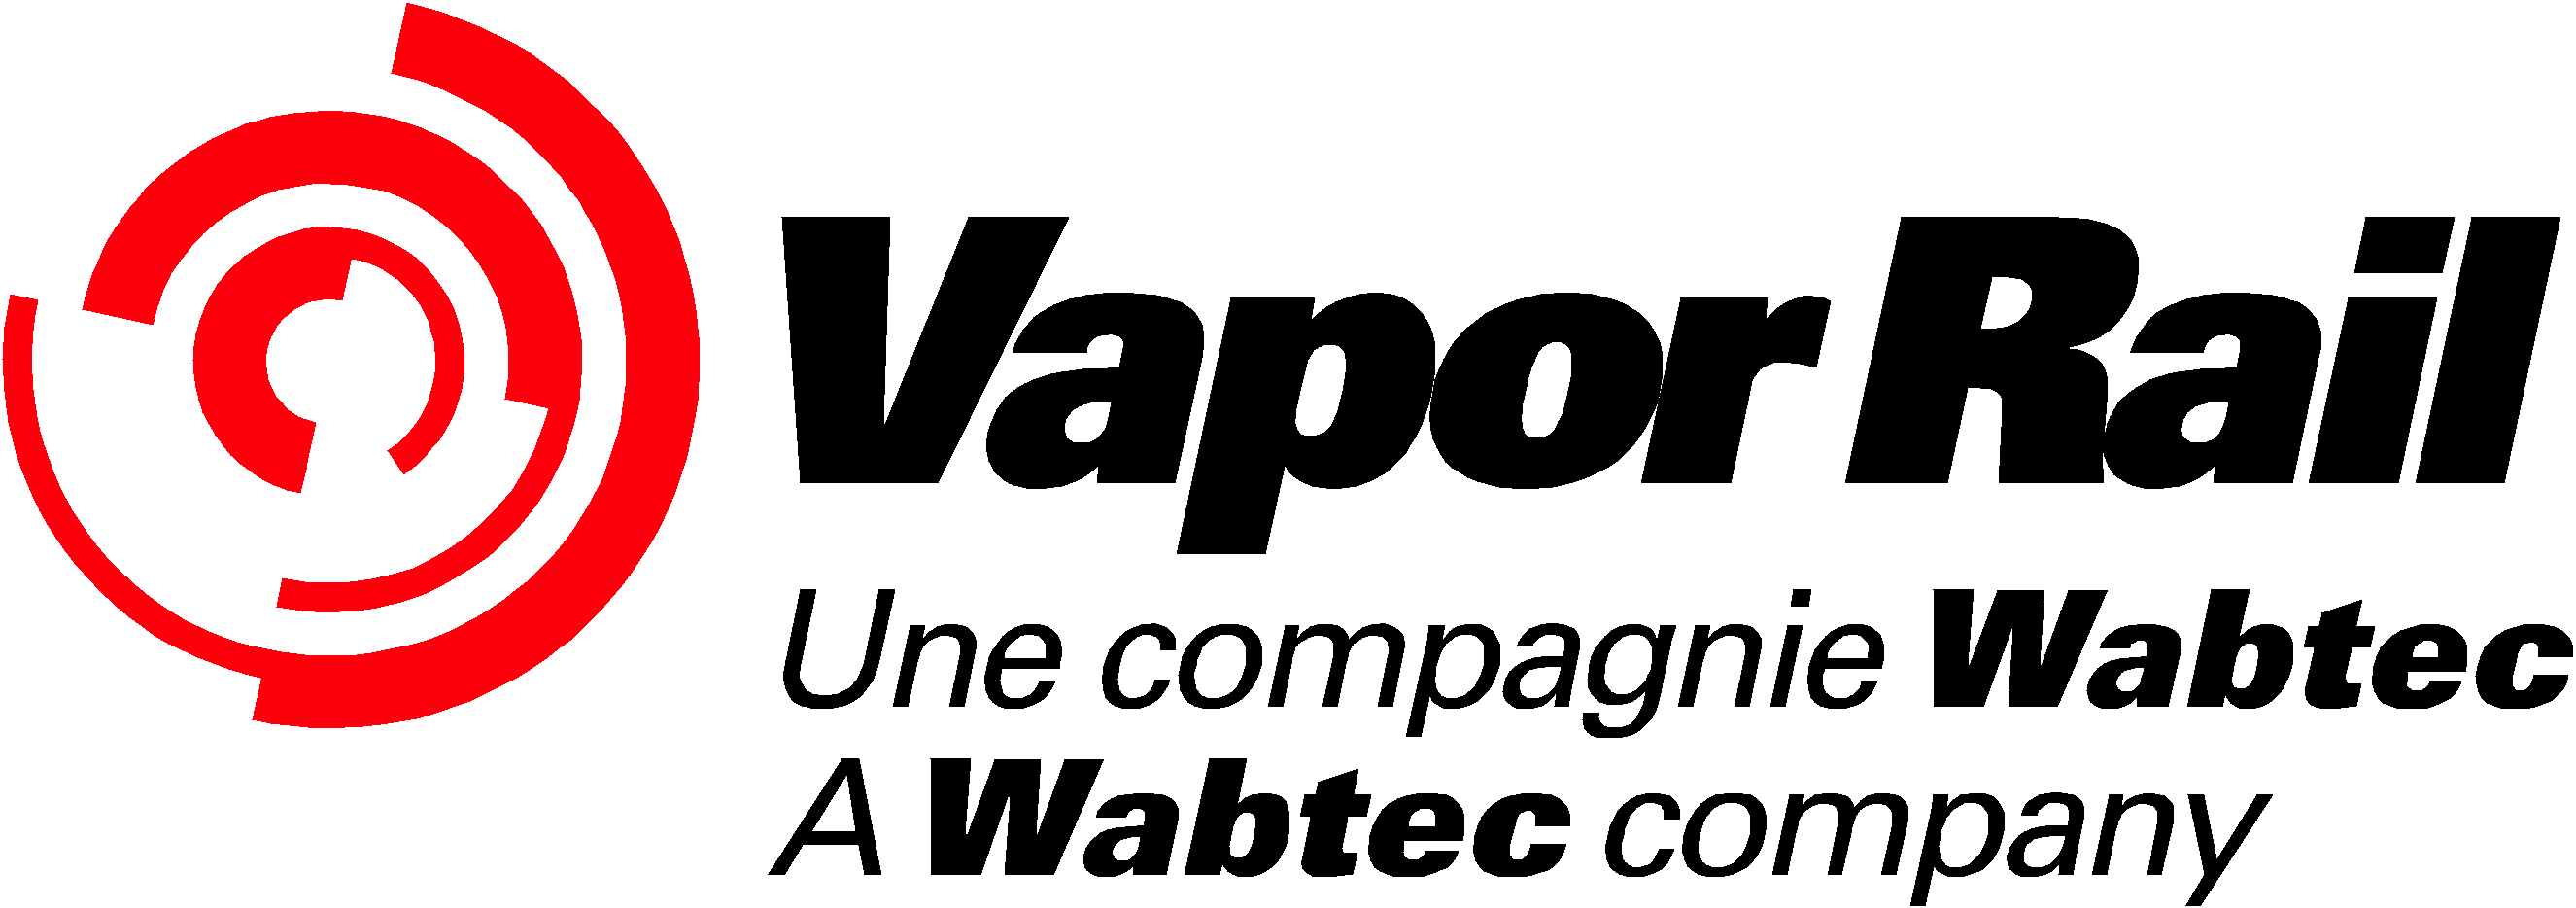 Vapor Rail logo color